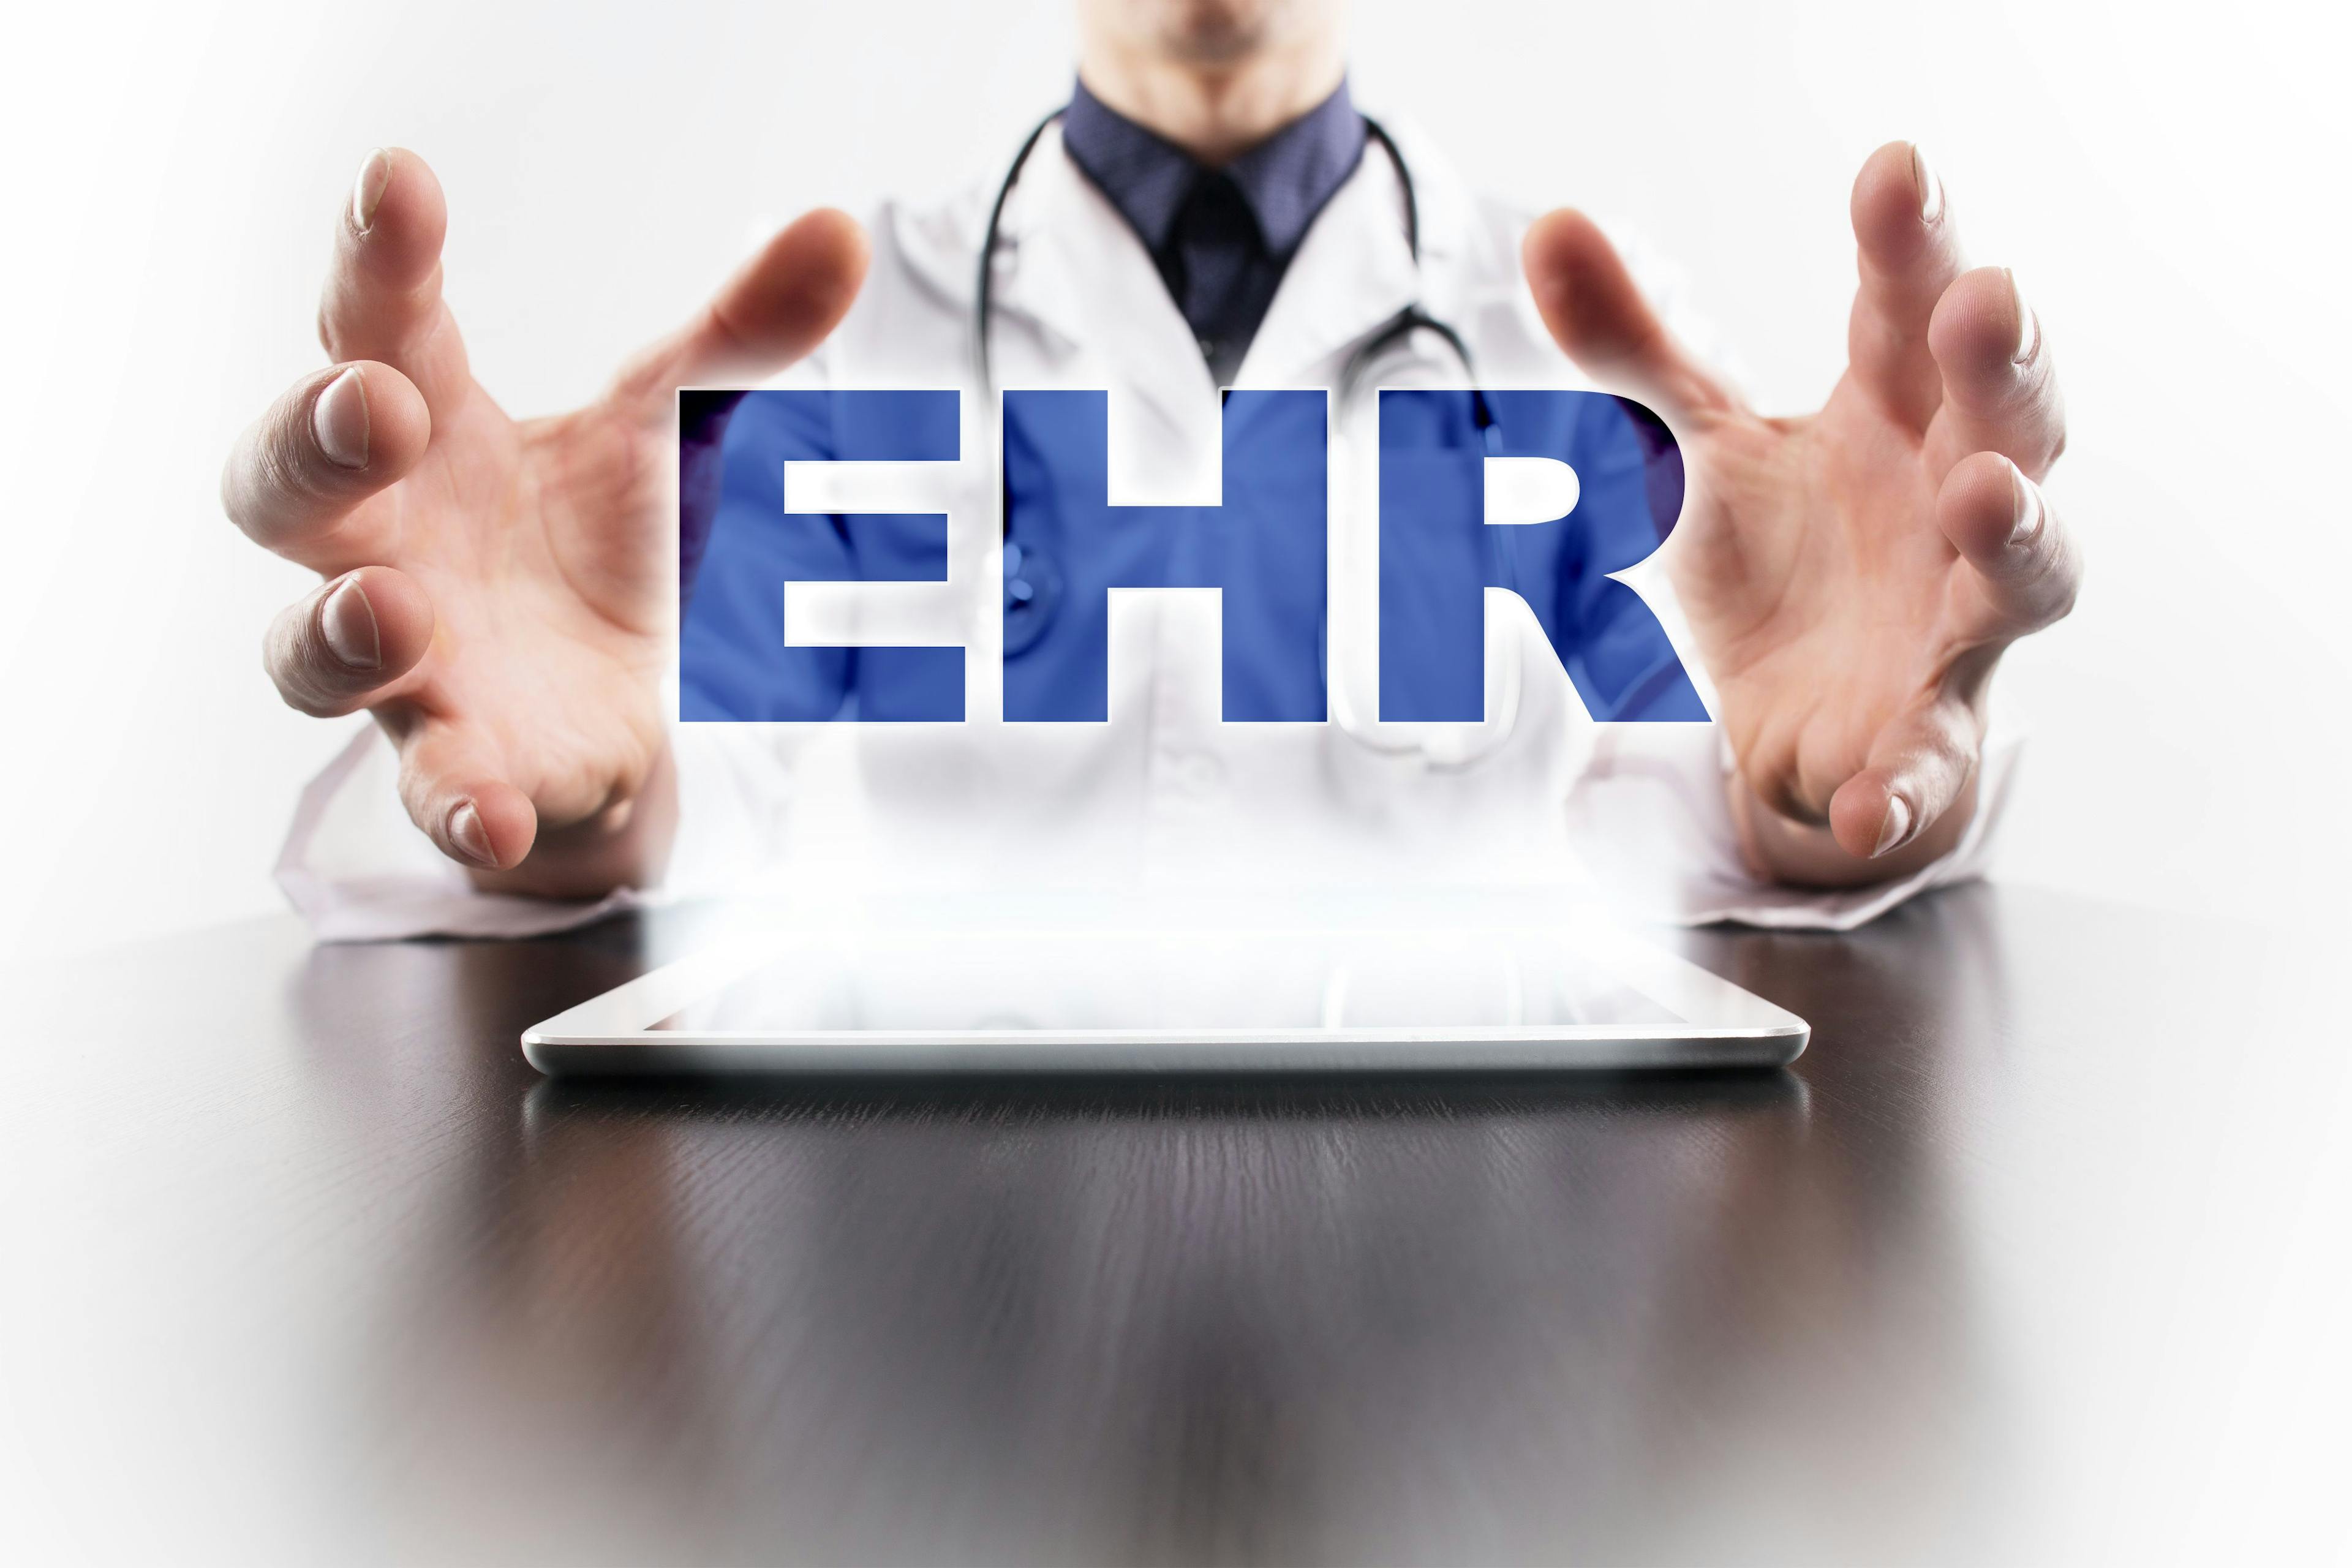 EHR documentation too focused on billing, doctors say